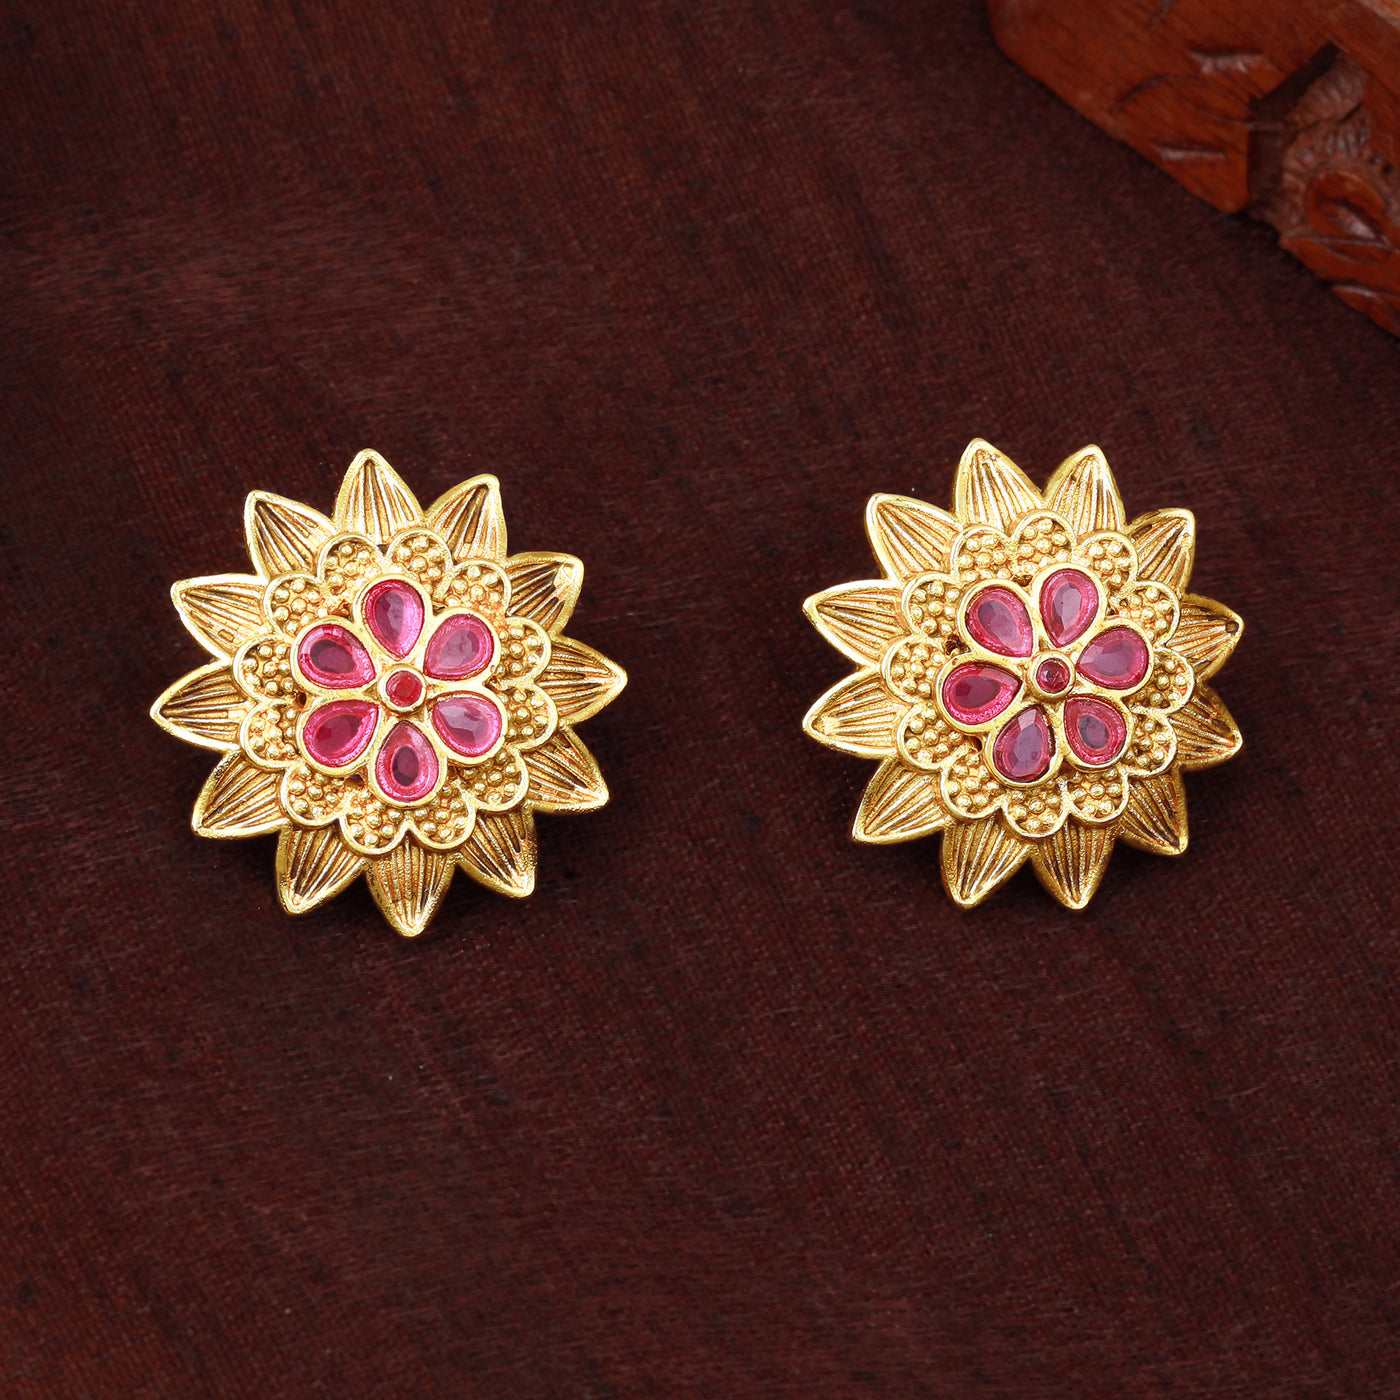 Estele Gold Plated Flower Designer Matt Finish Stud Earrings with Ruby Crystals for Women